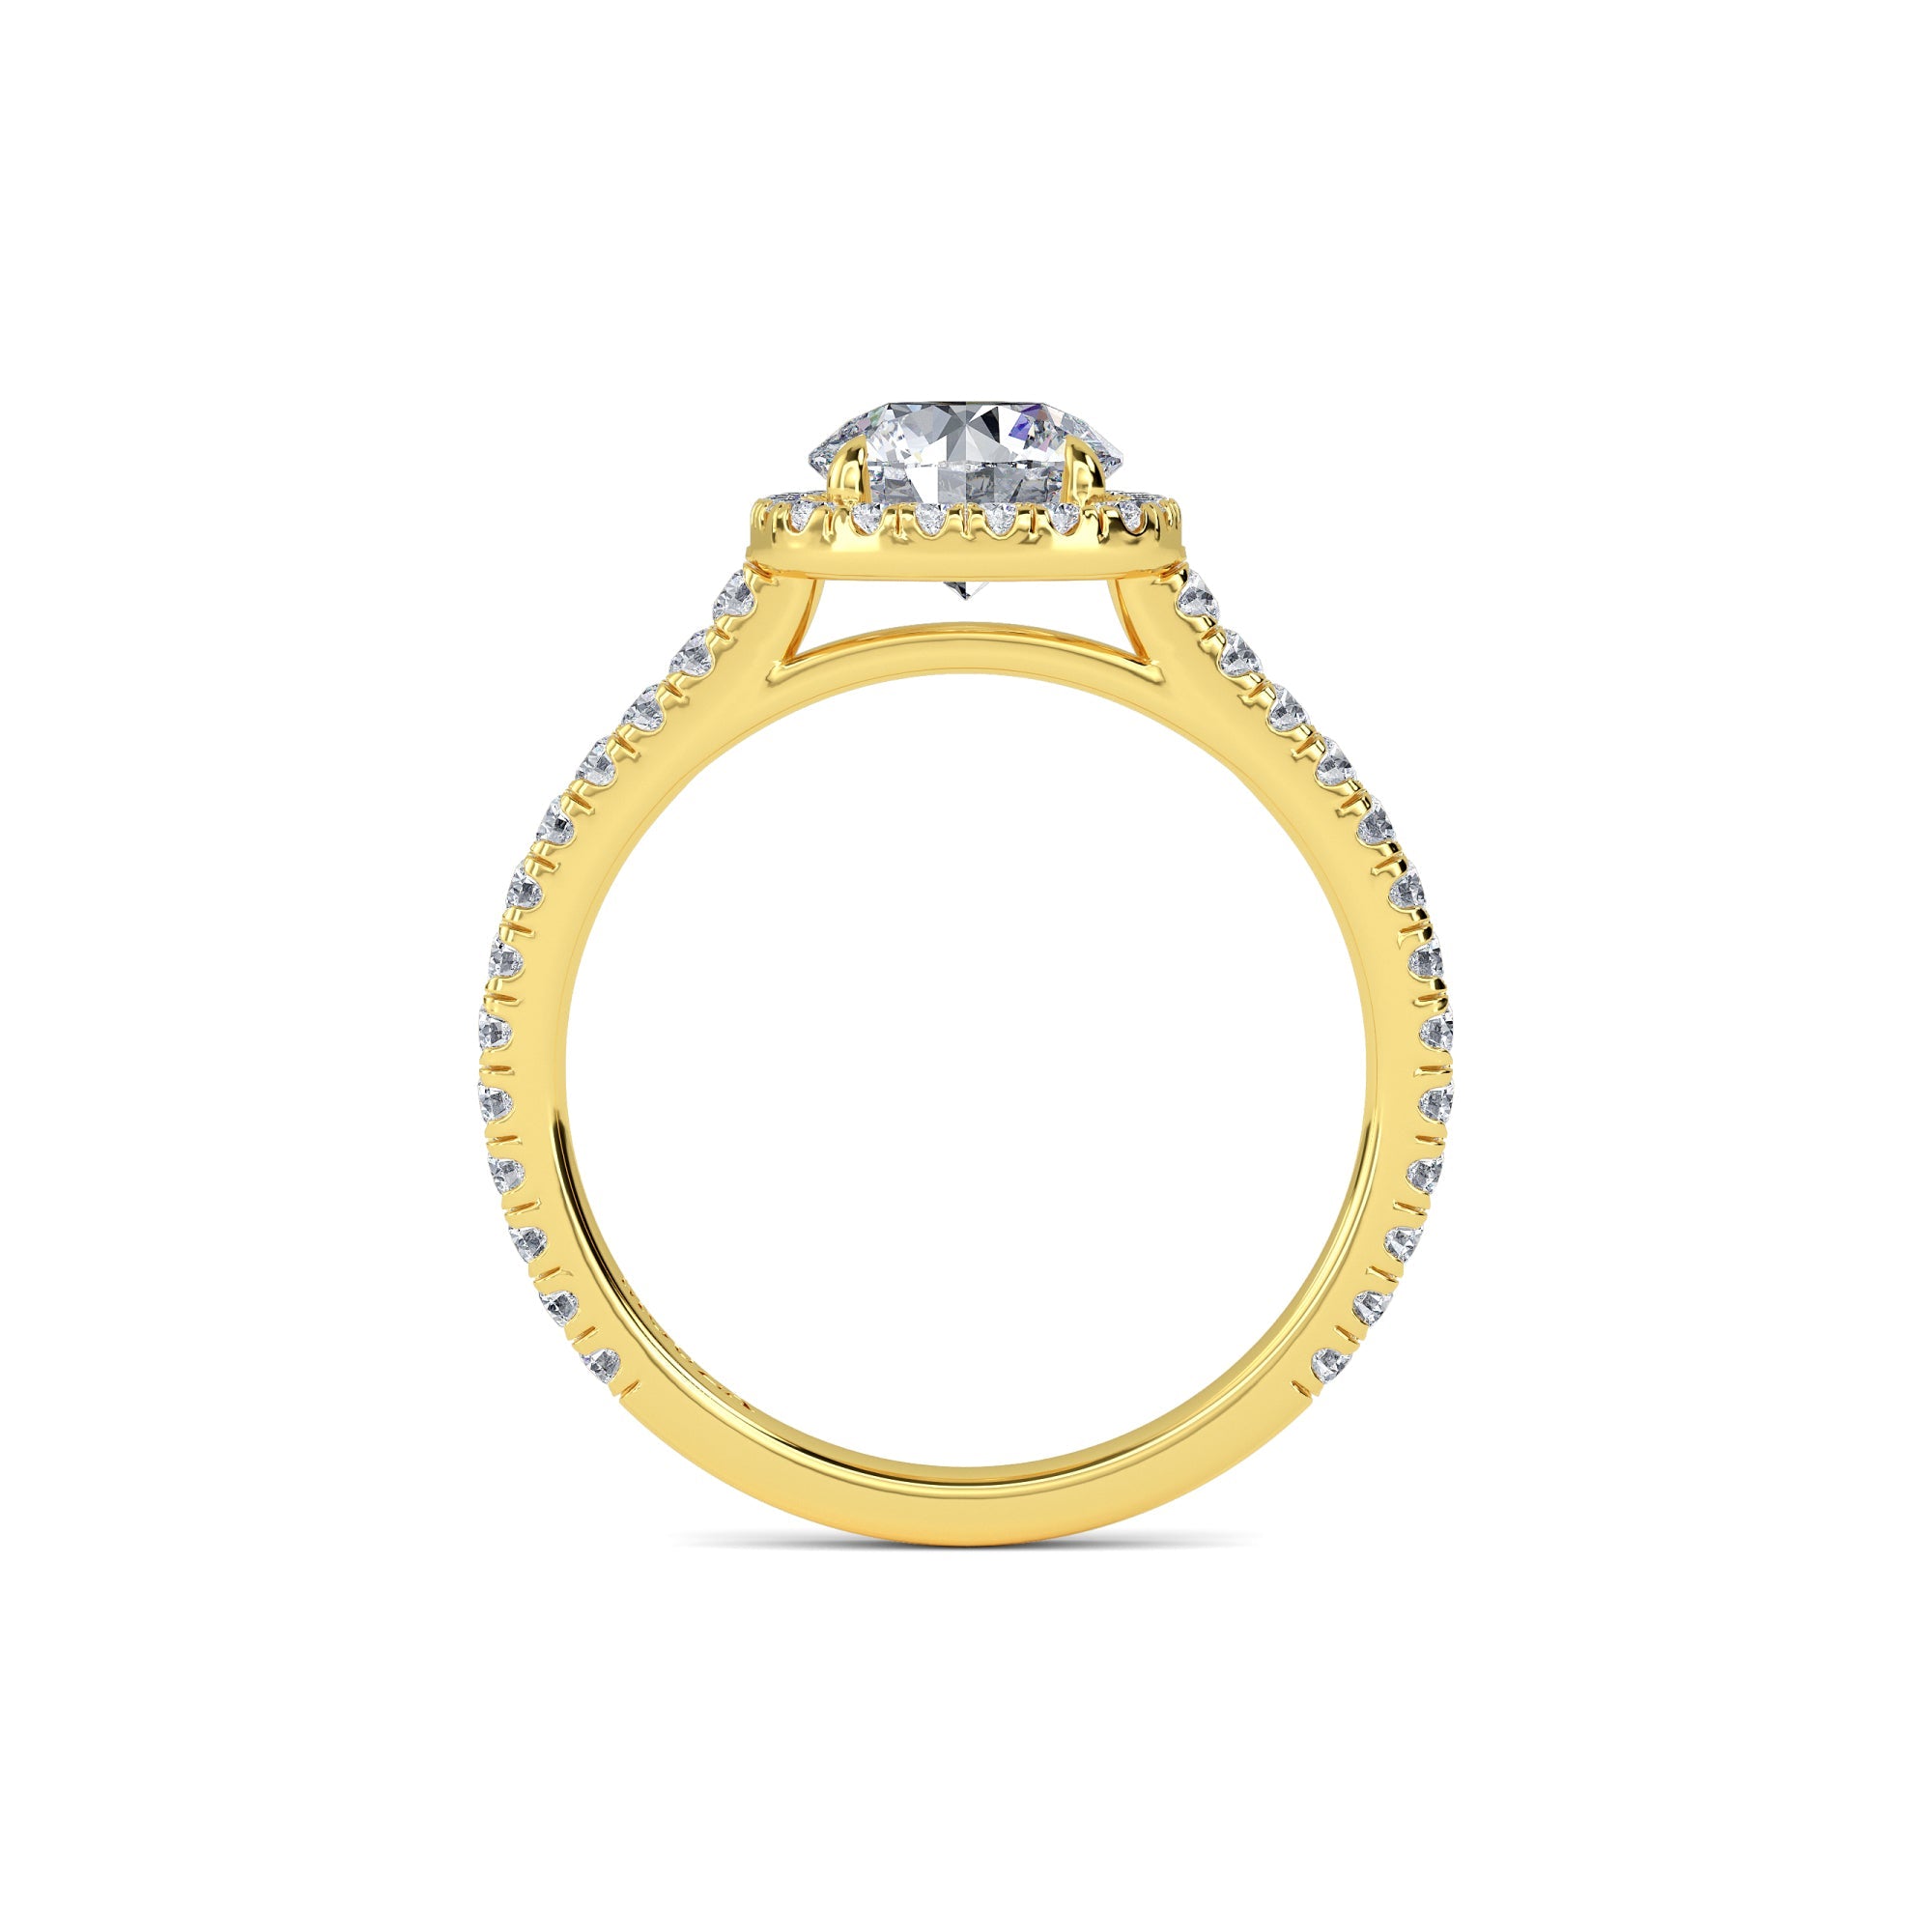 1 Carat Natural Cushion Diamond - Hatton Garden Engagement Ring